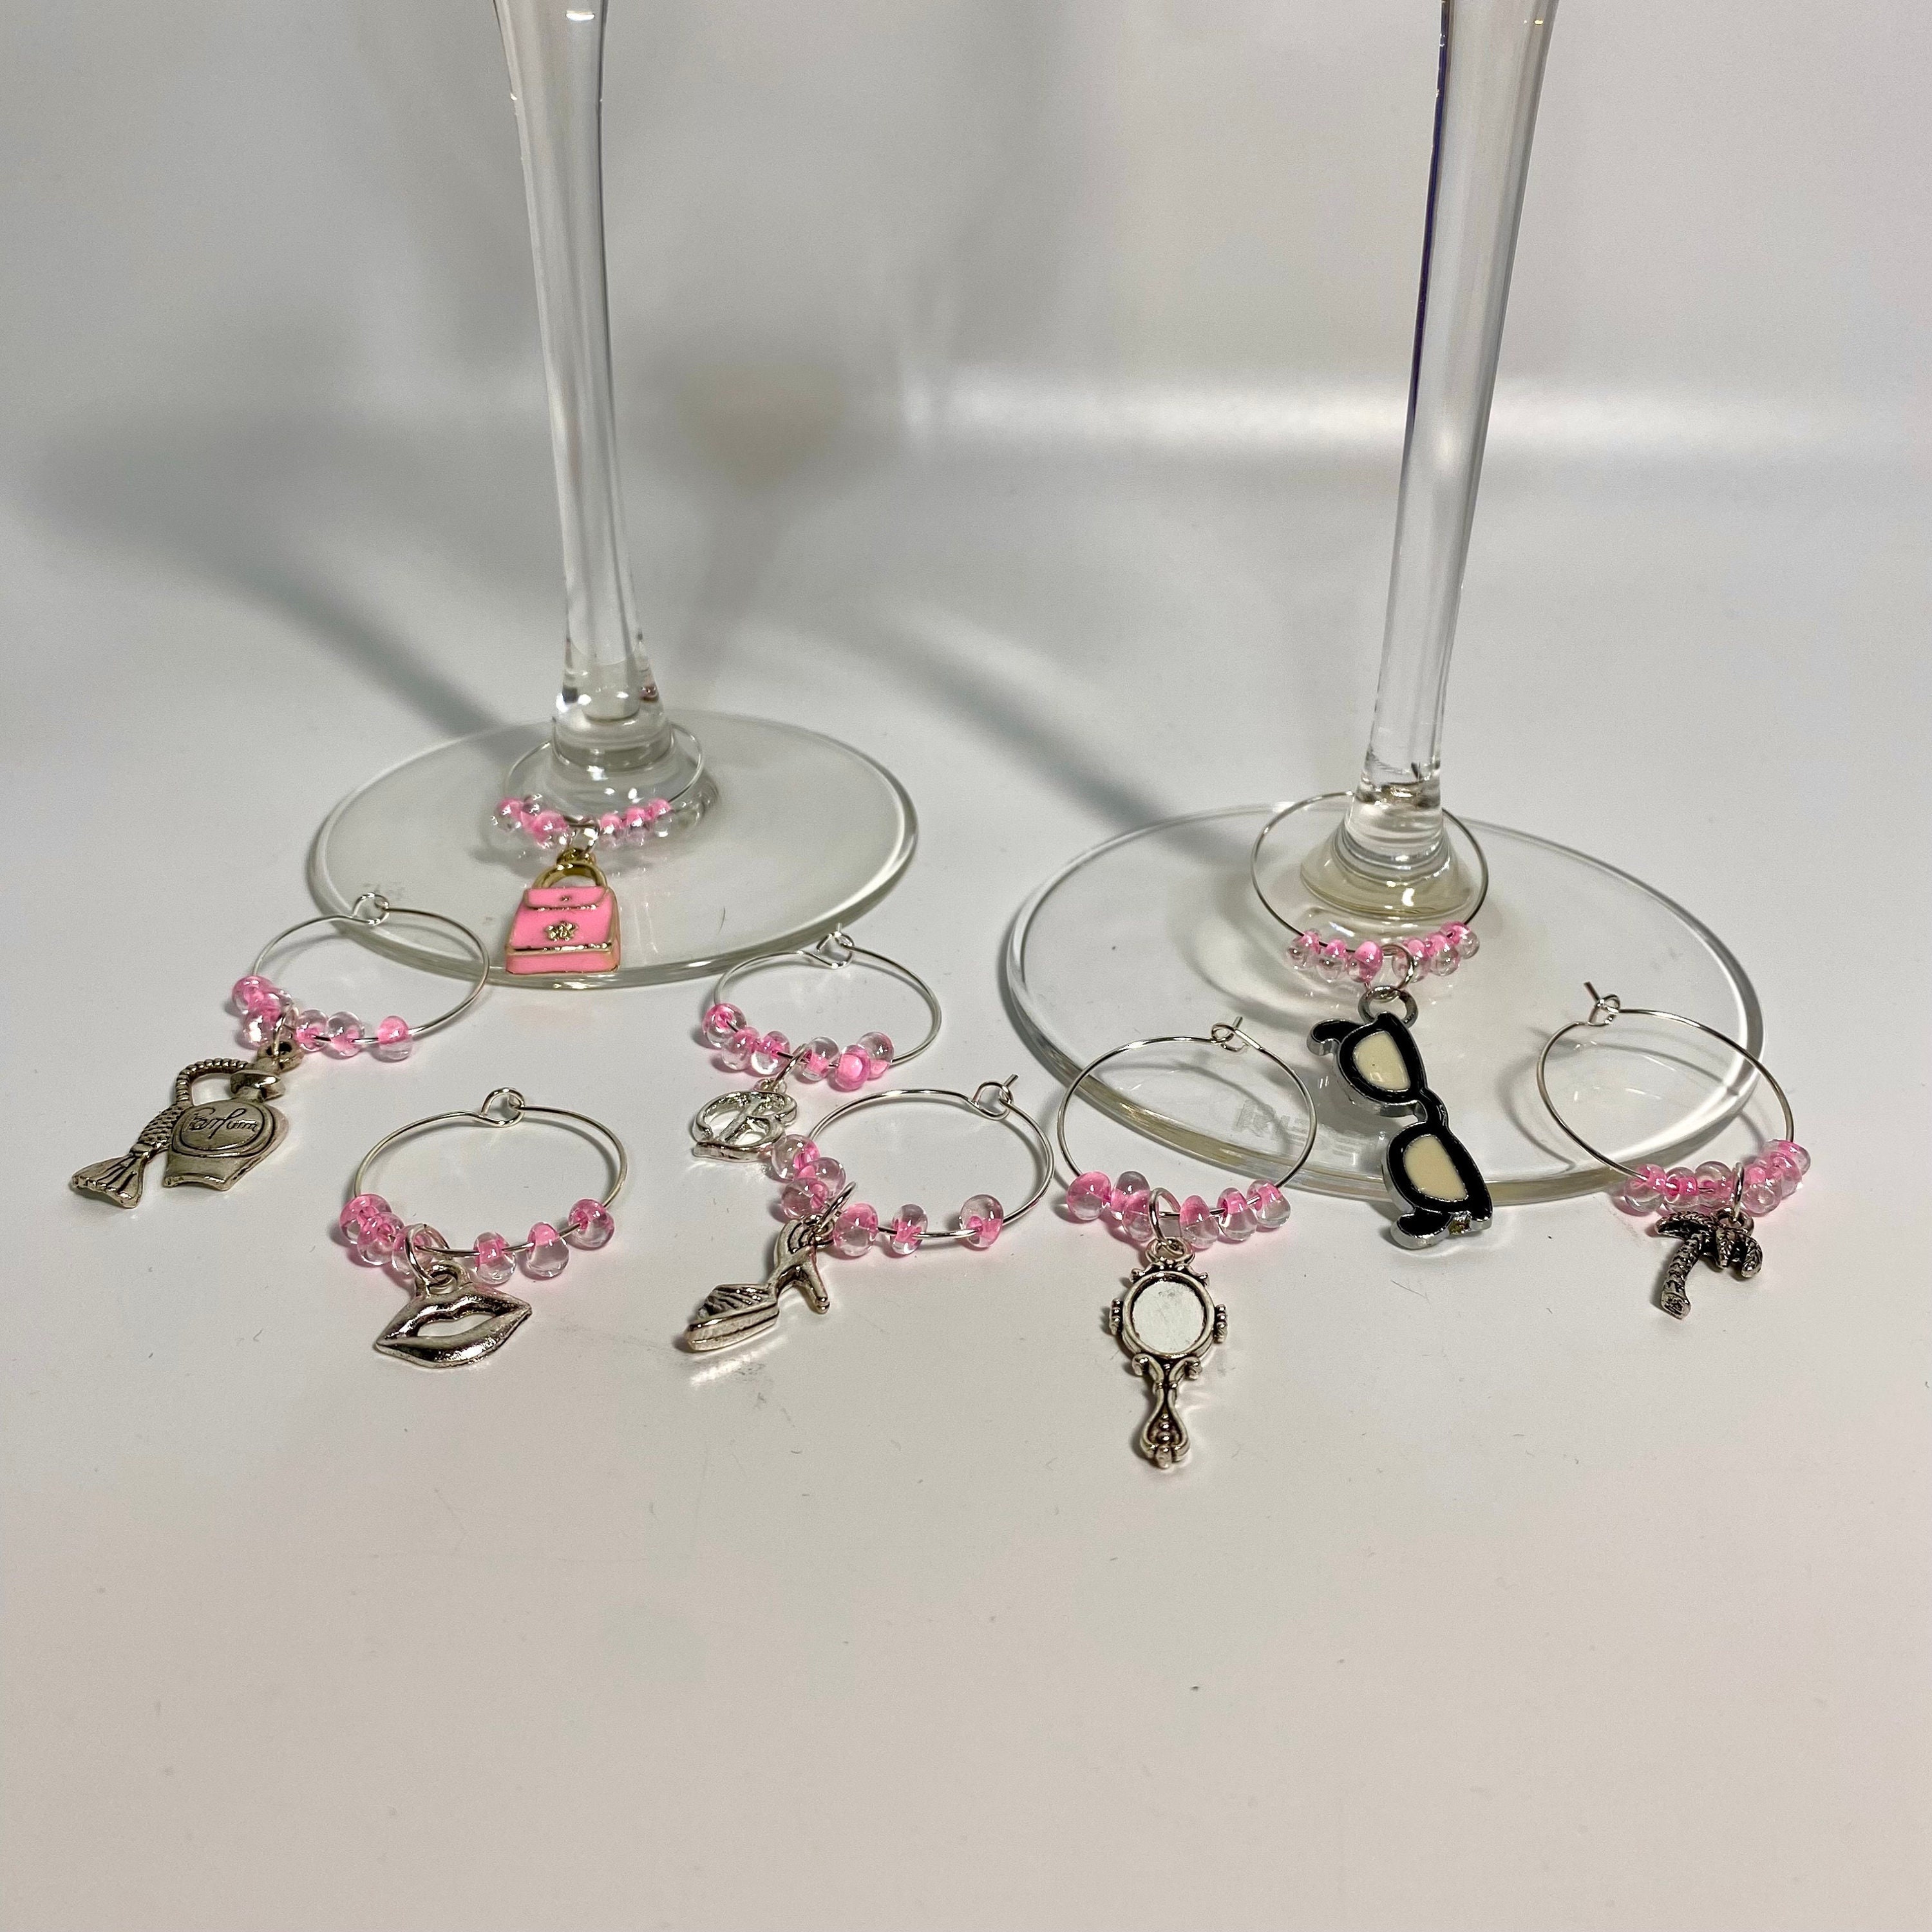 Wine glass charms as jewellery. : r/Barbie